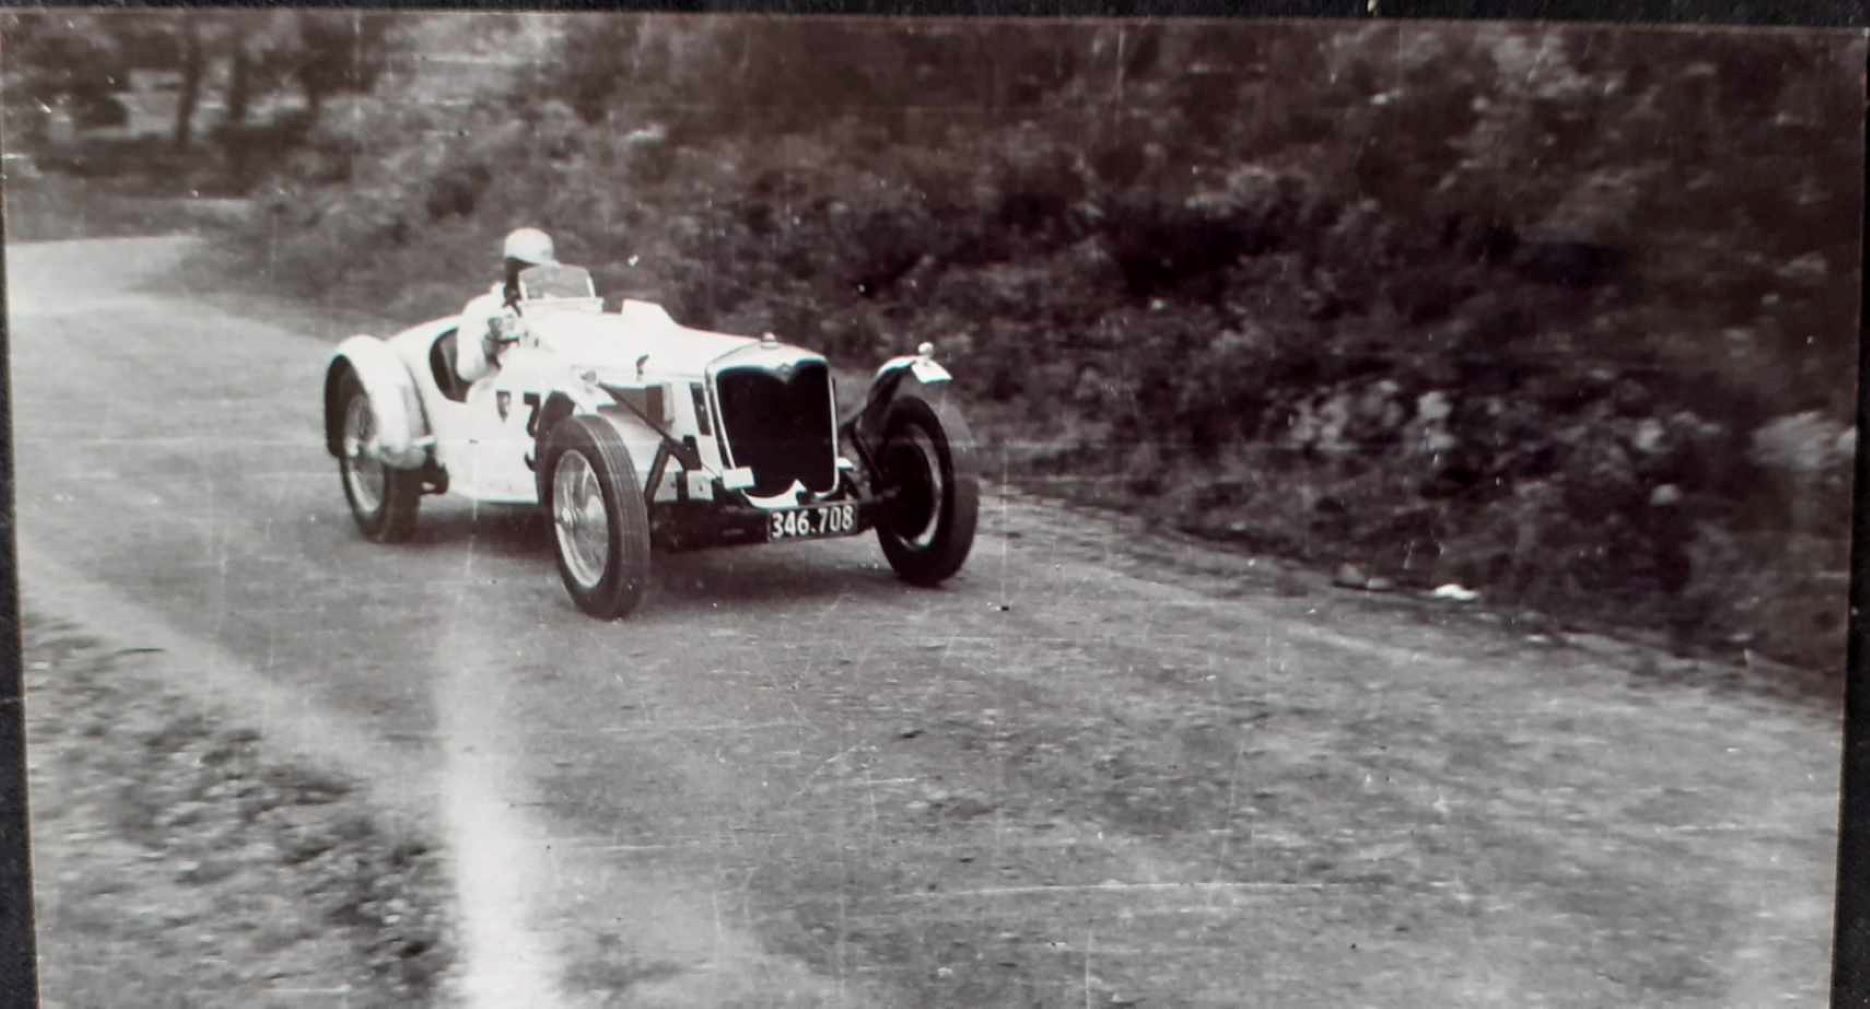 Name:  NSCC 1950 #0122 Riley Race #3 Q at Hill Climb - 346.708 1951 -56 plate 1950's - image Graeme Wel.jpg
Views: 198
Size:  178.4 KB